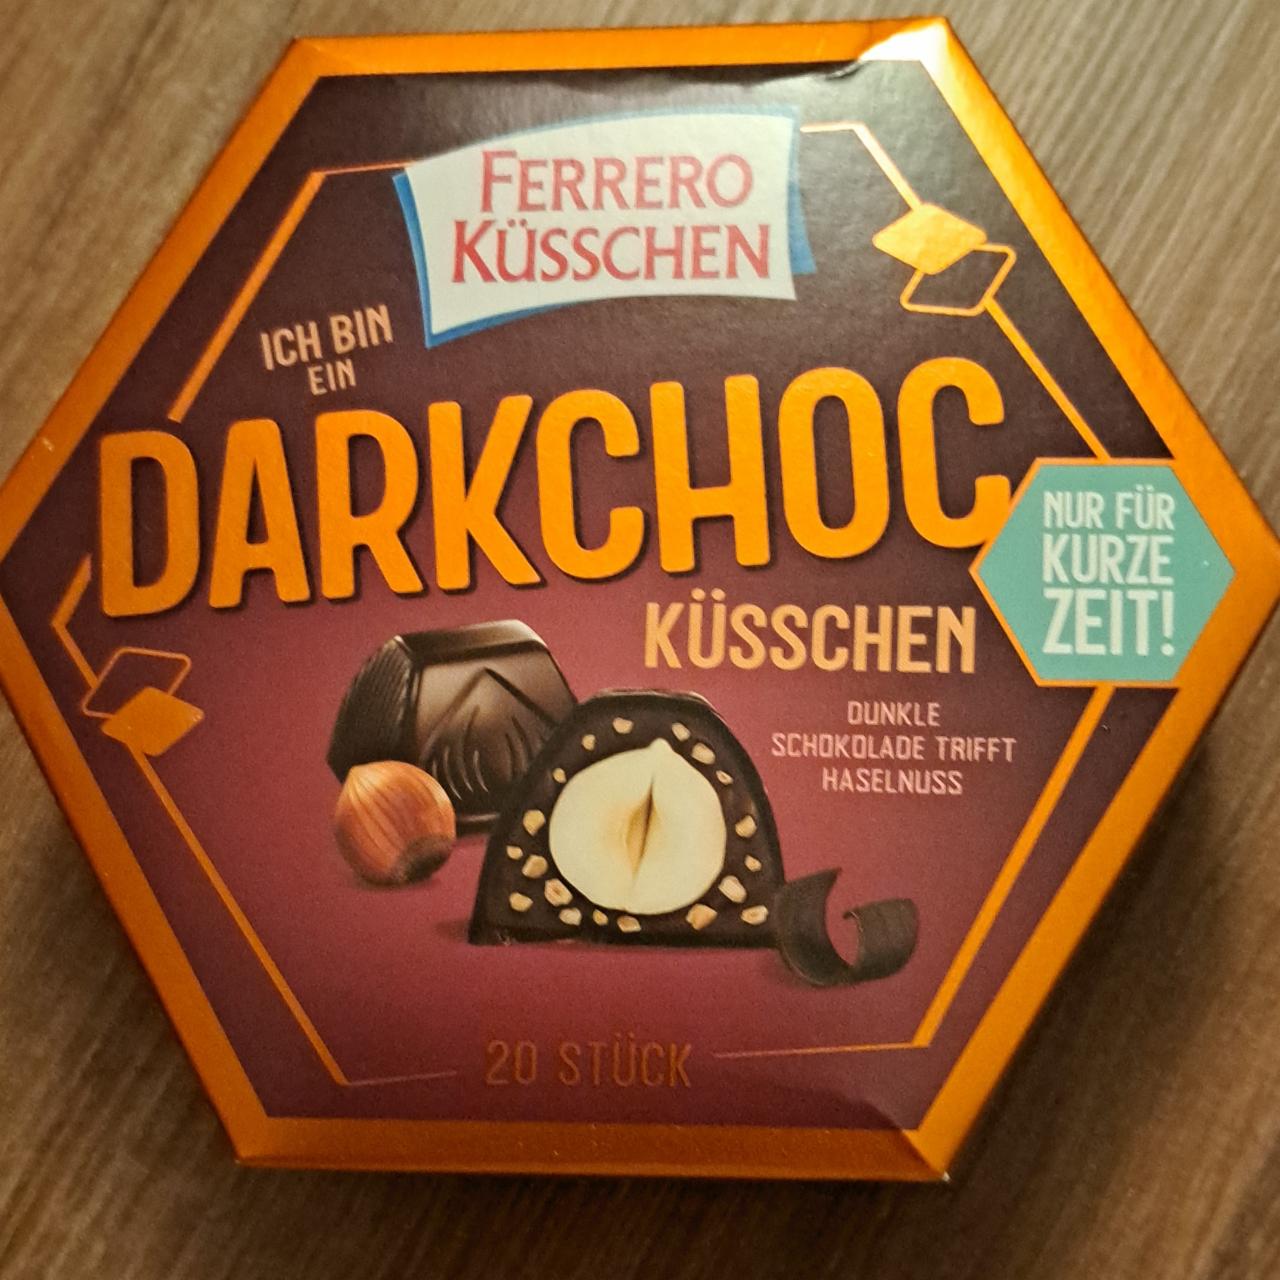 Fotografie - Darkchoc Ferrero Küsschen